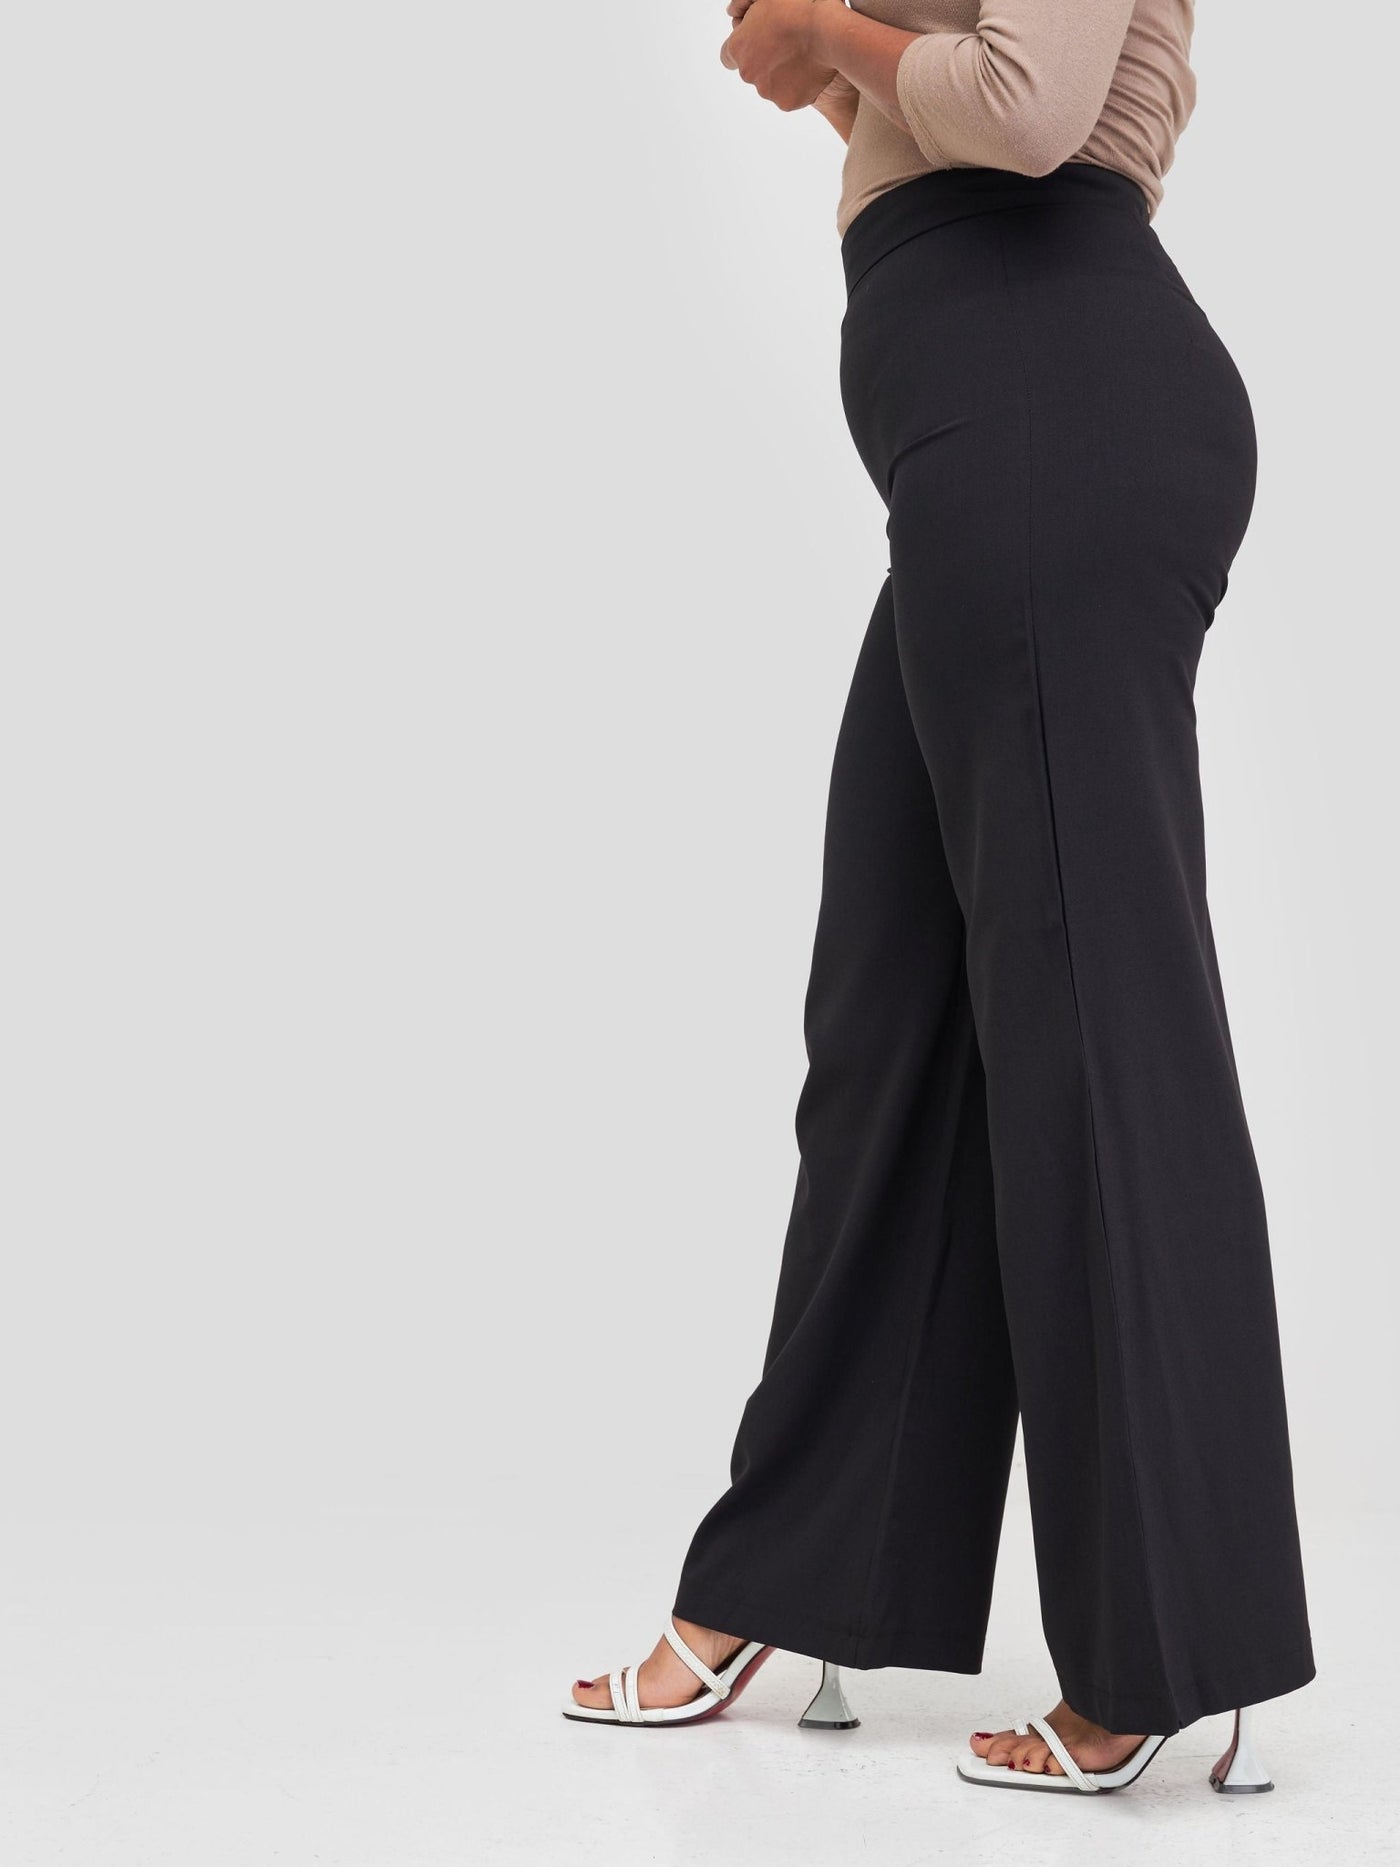 Anika Boot-Cut Dress Pants With Zipper on the Side - Black - Shopzetu